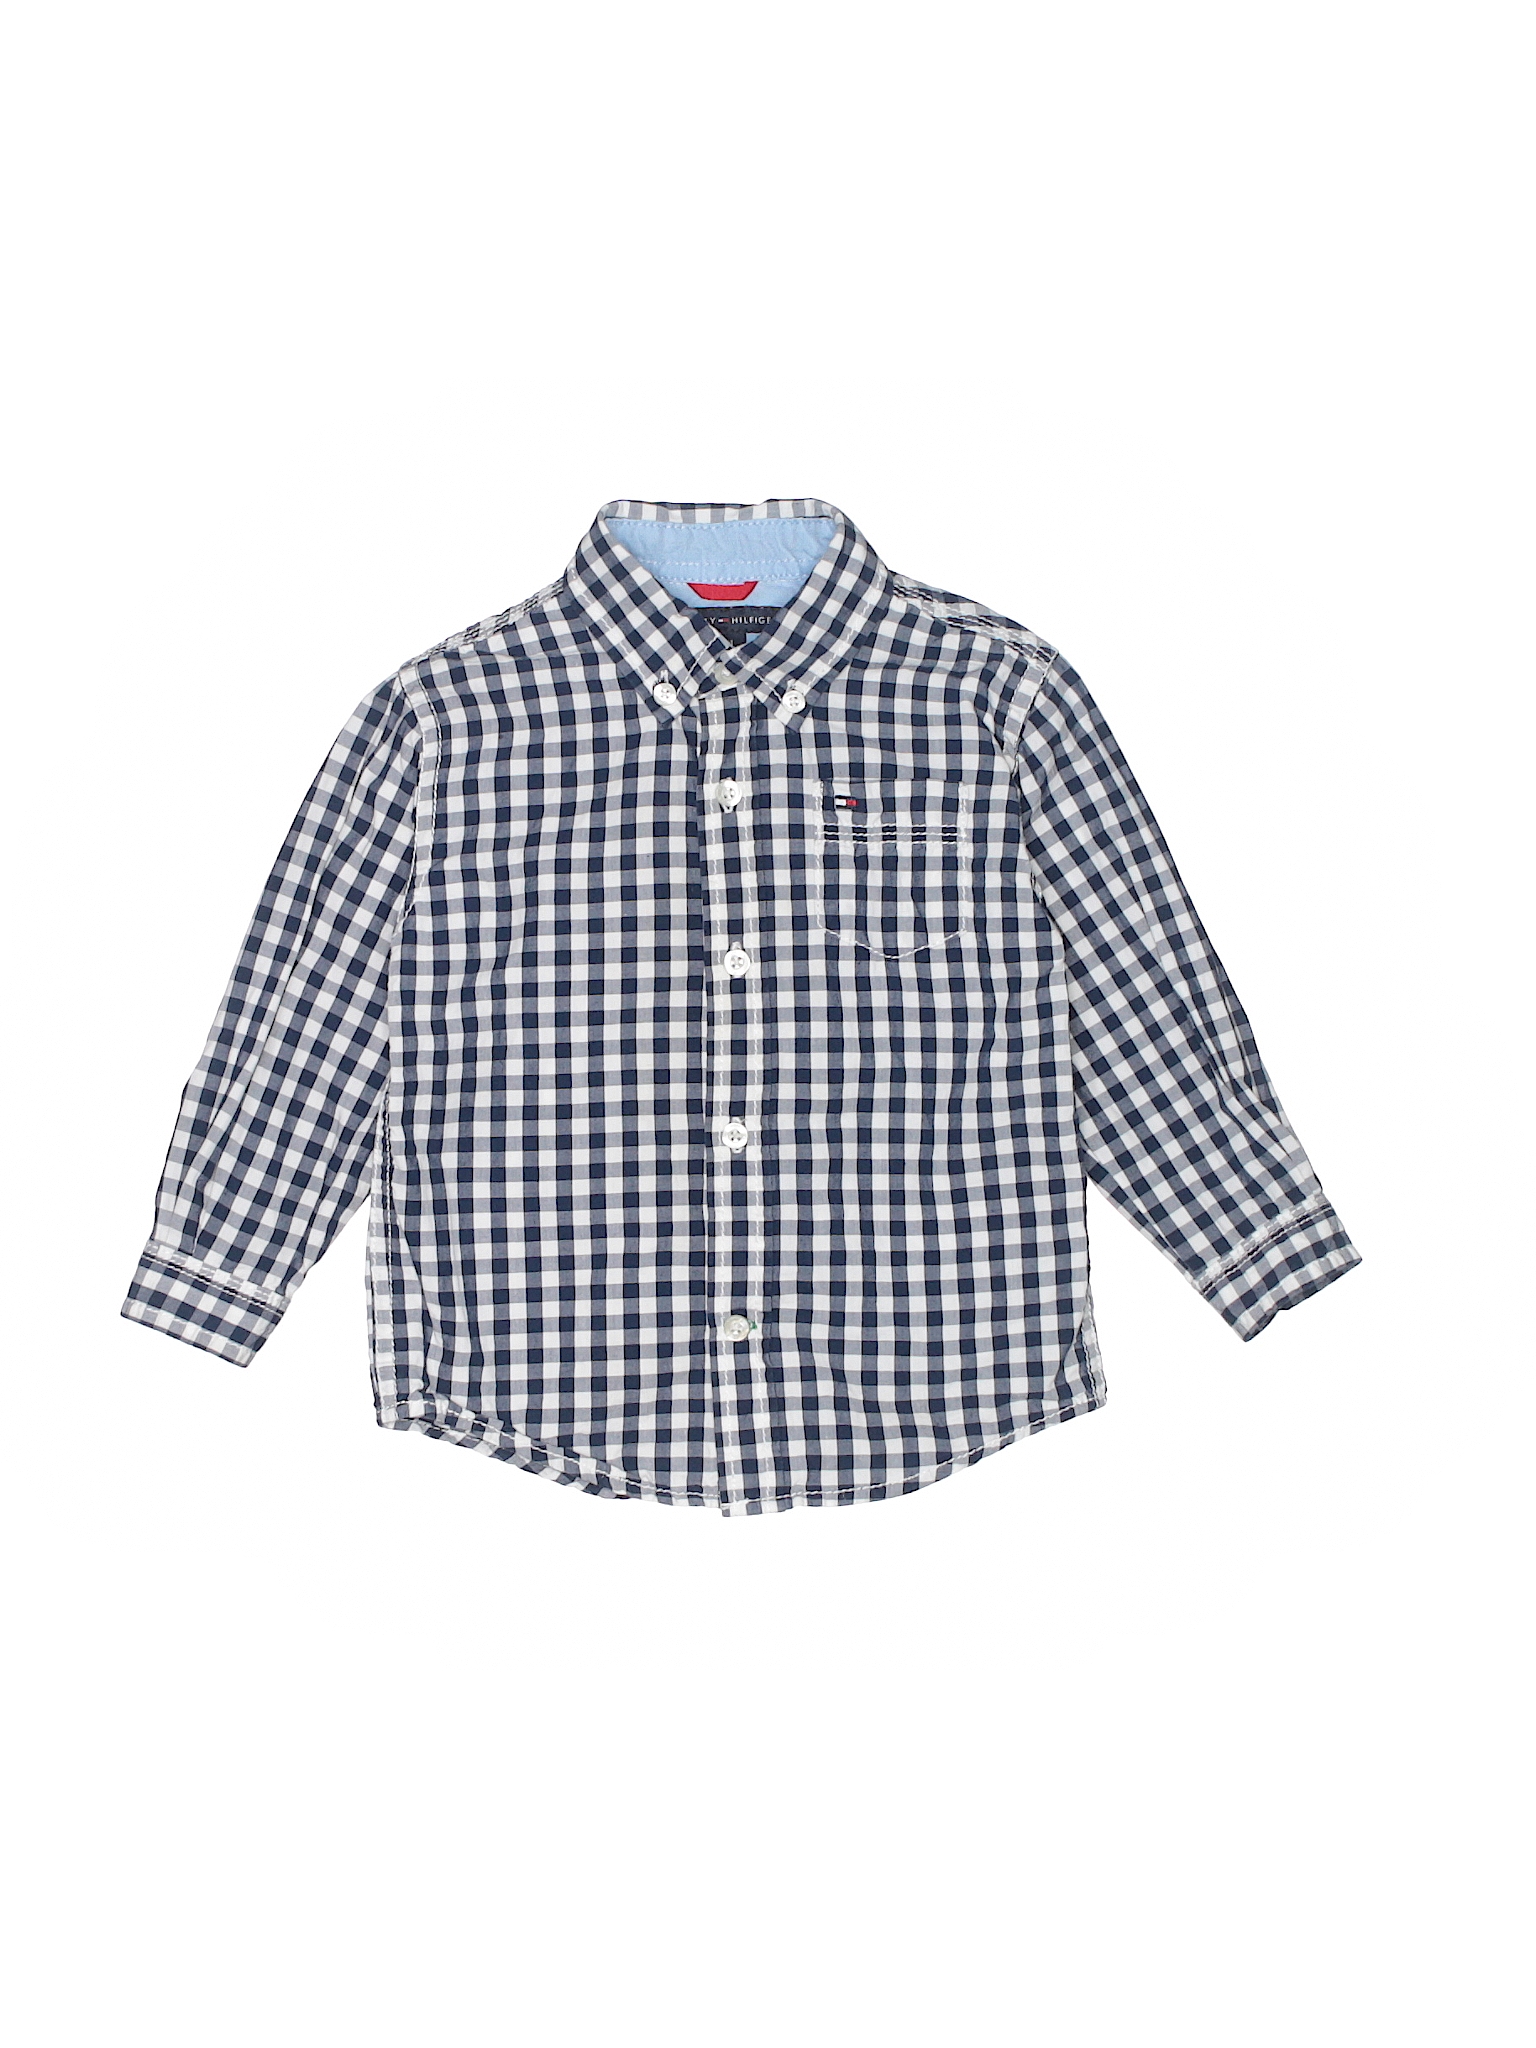 Cotton Checks Tommy Hilfiger Shirts, Full or Long Sleeves at Rs